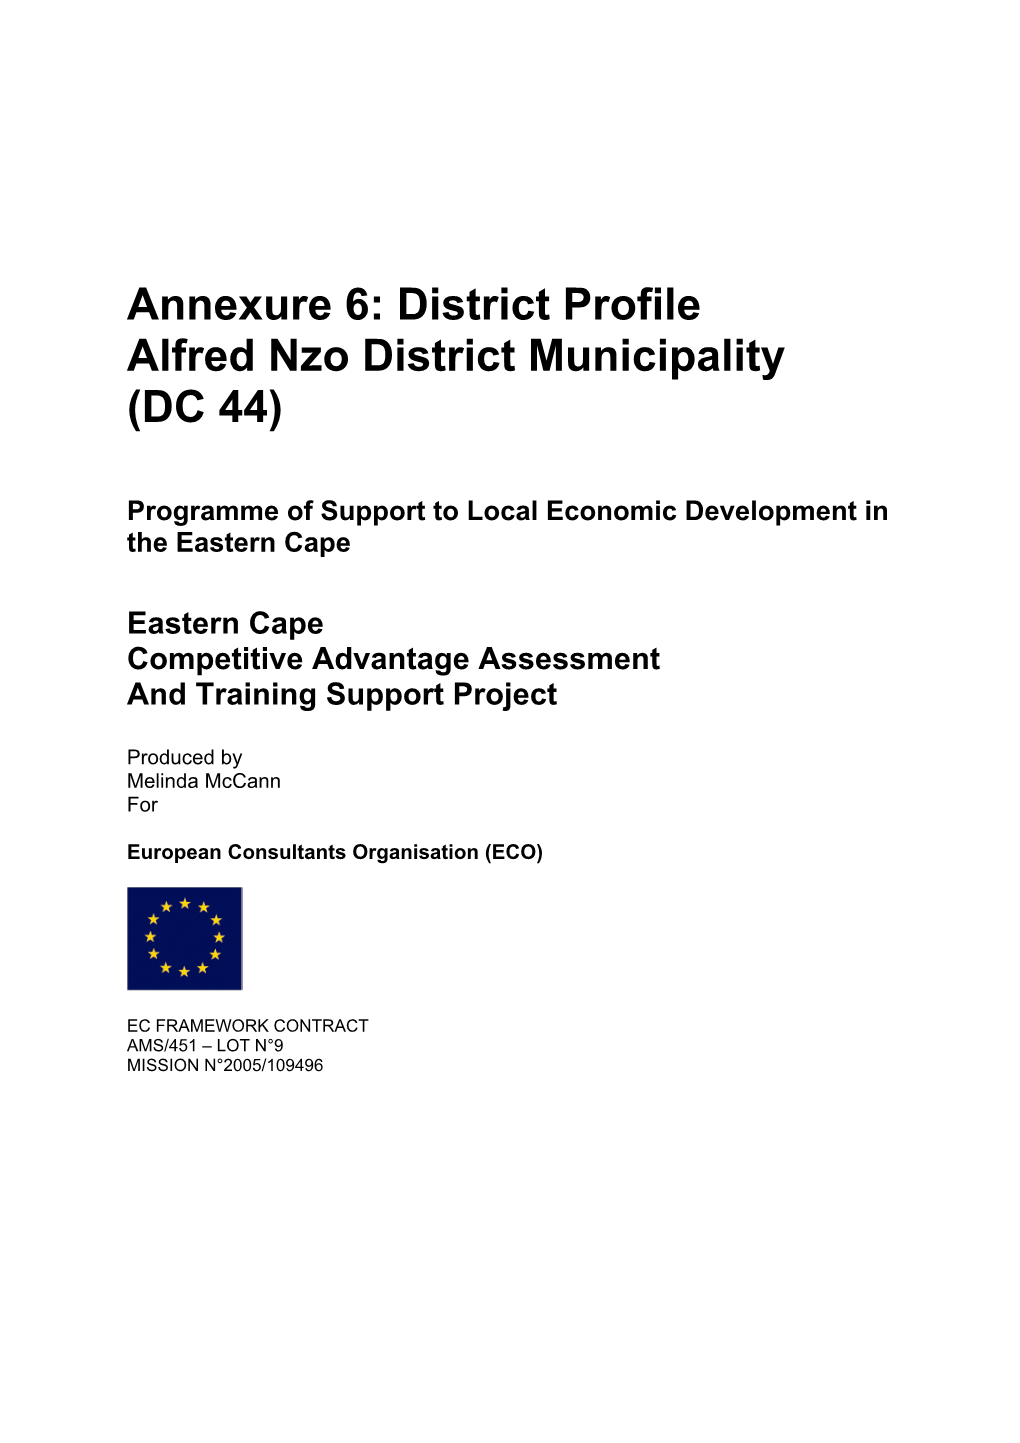 District Profile Alfred Nzo District Municipality (DC 44)